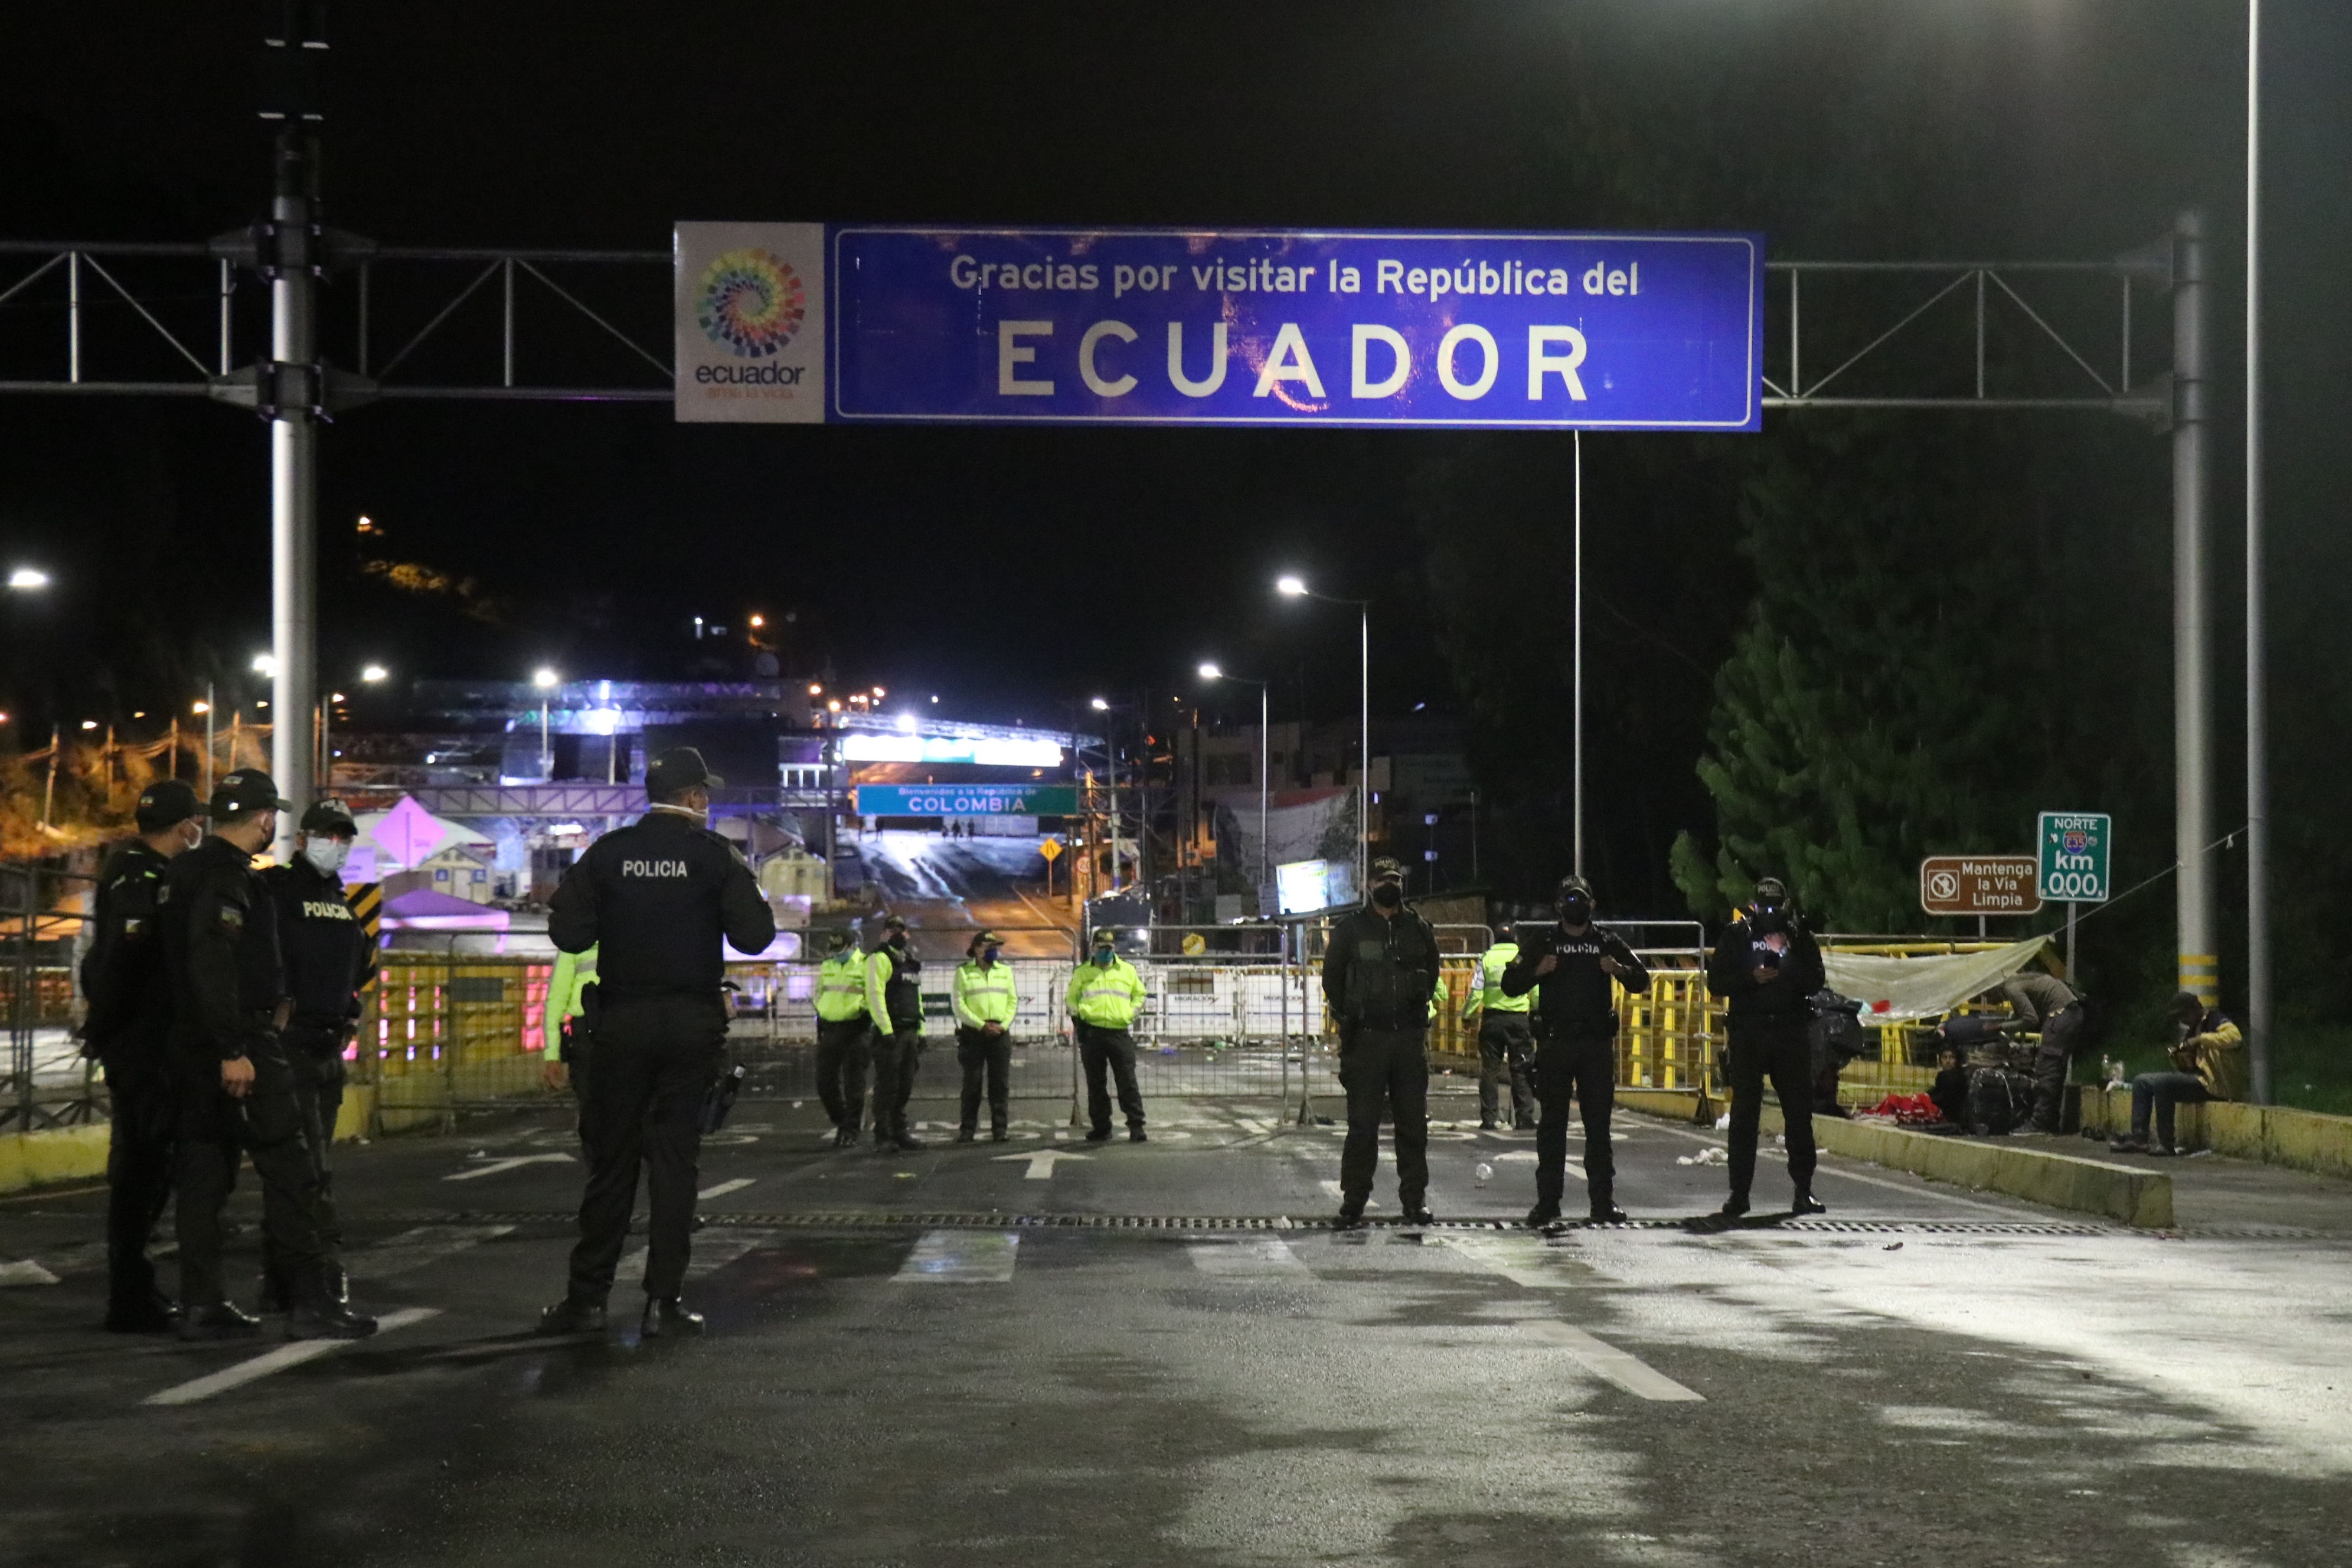 Germán Cáceres, the main suspect in the femicide of María Belén Bernal, left Ecuador by crossing the Rumichaca Bridge on the northern border of the country (EFE / Xavier Montalvo)